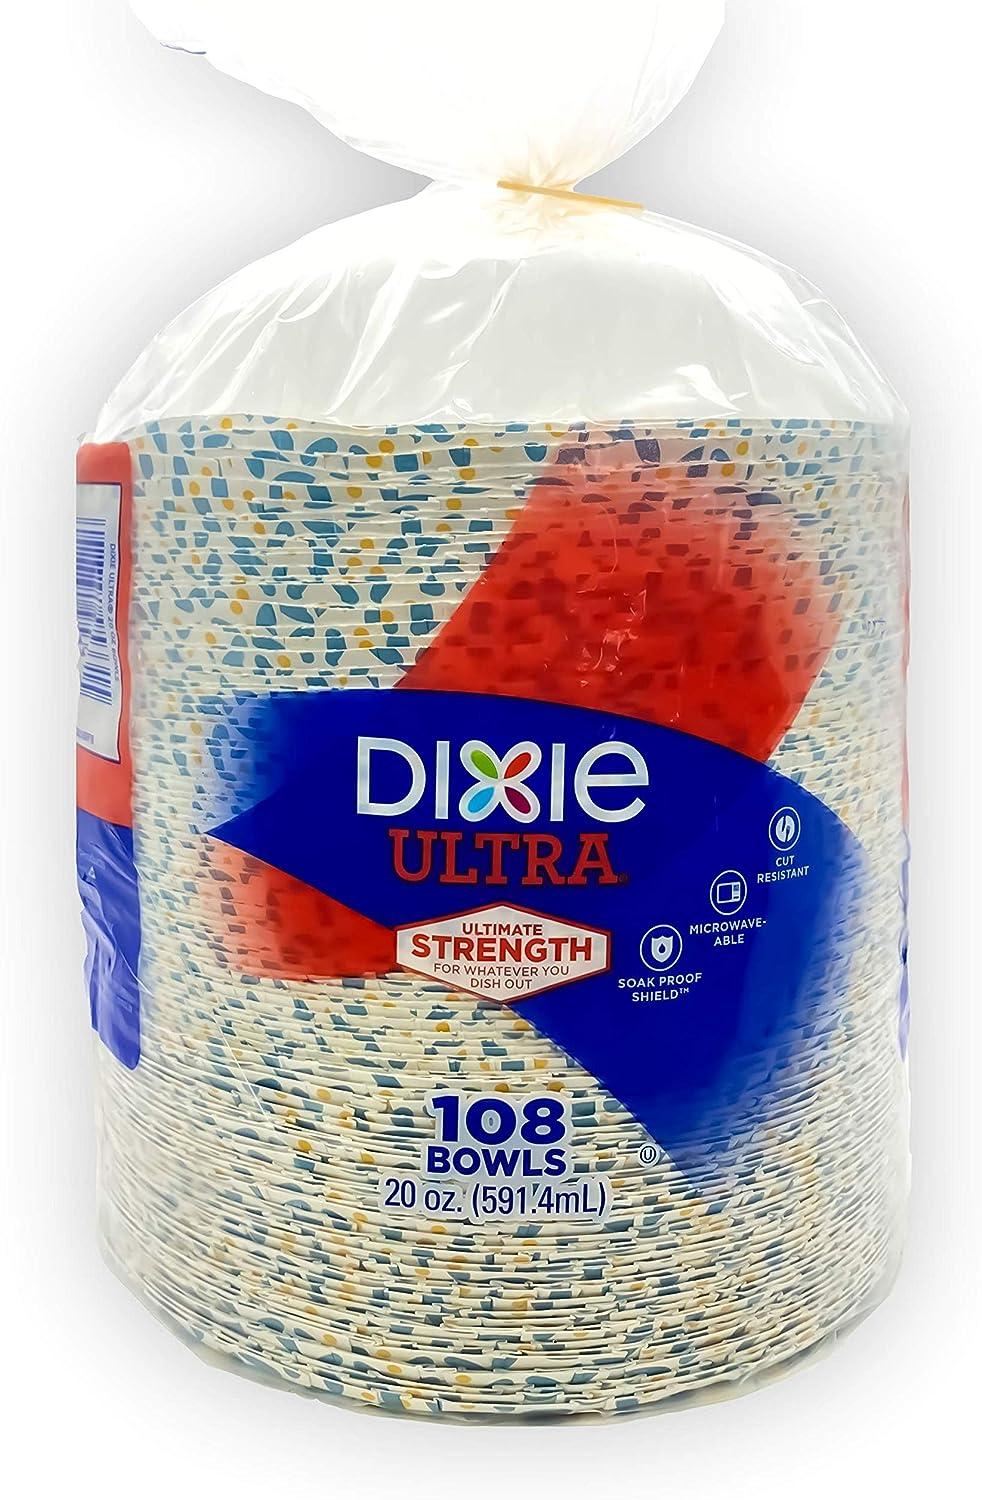 Dixie Ultra Paper Bowls, 20 oz, 135 Count